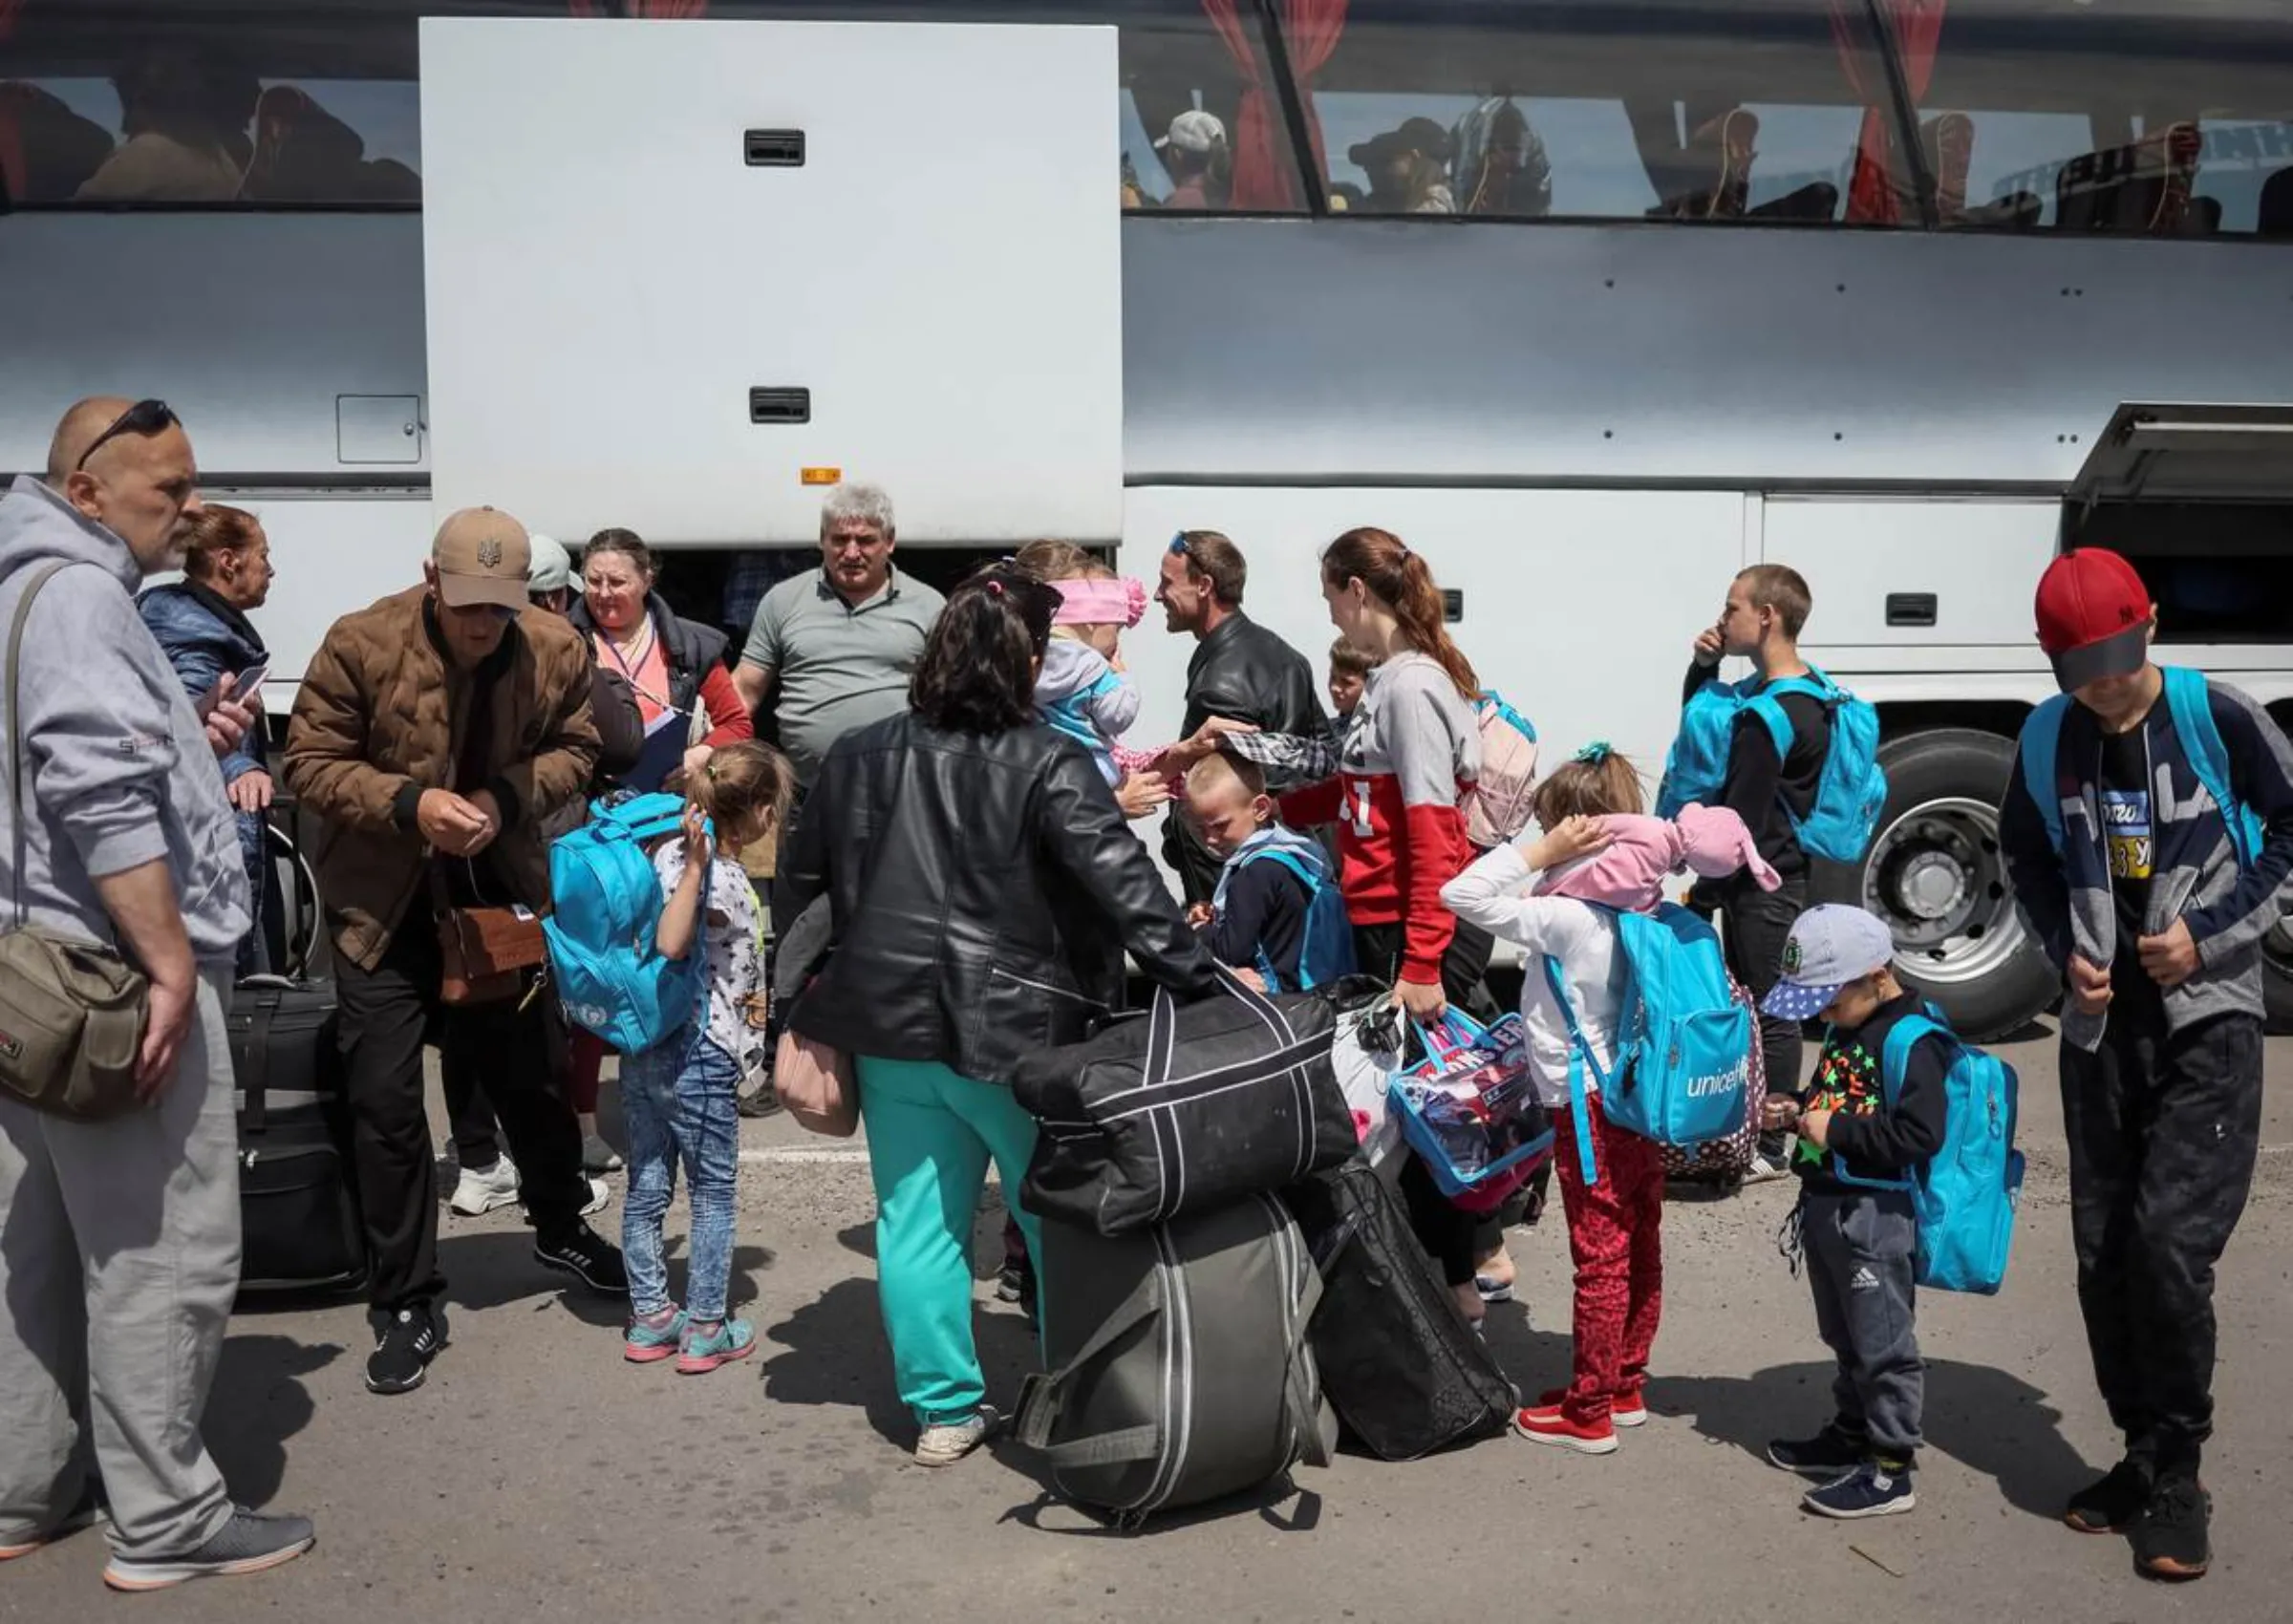 Ukrainian refugees from the Mariupol region board a bus bound for Poland following Russia's invasion of Ukraine. Photo taken in Zaporizhzhia, Ukraine, May 17, 2022. REUTERS/Gleb Garanich